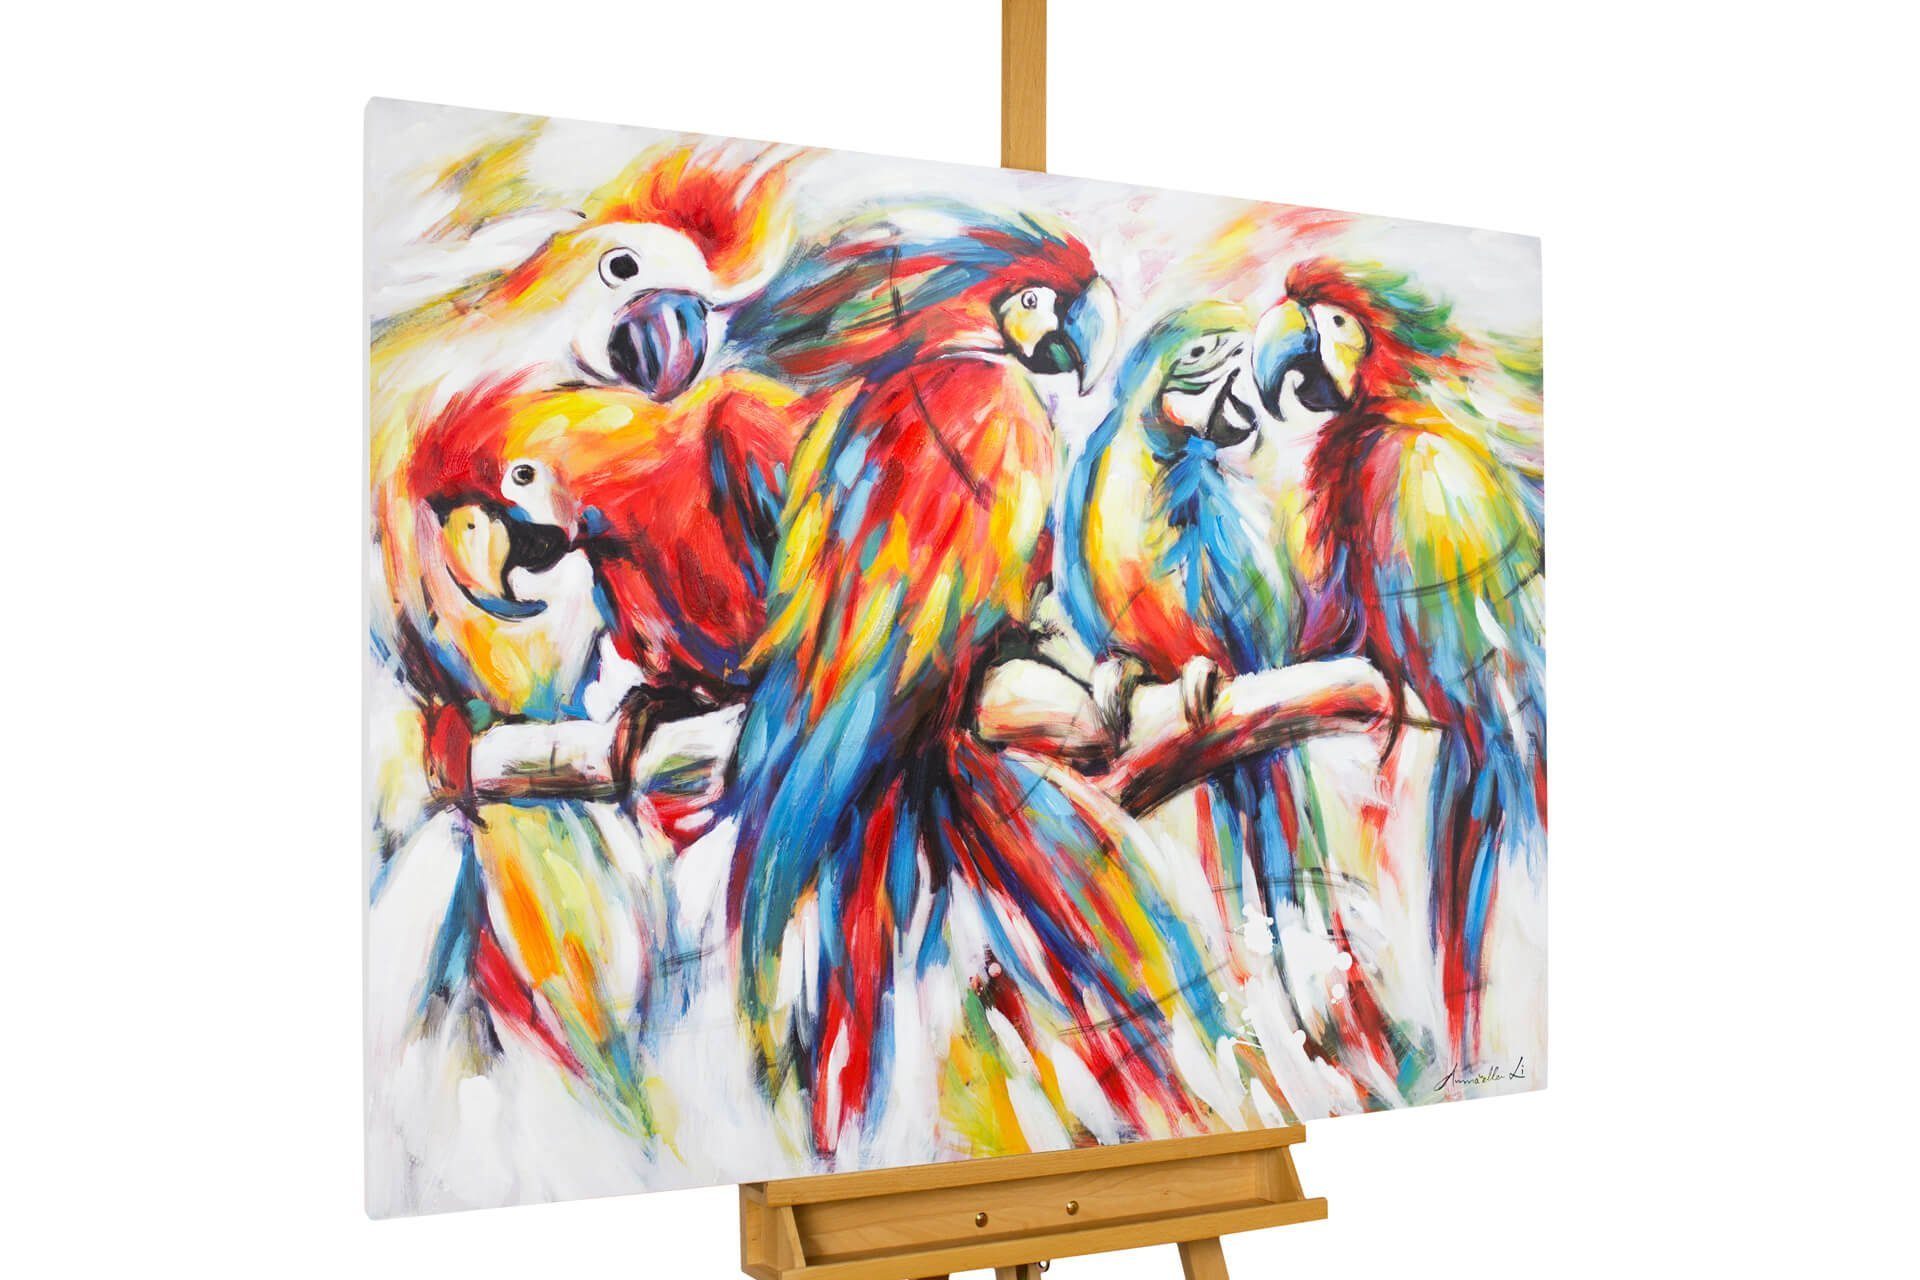 Wohnzimmer cm, Wandbild Gemälde Parrots 100% Love 120x90 HANDGEMALT Leinwandbild in KUNSTLOFT